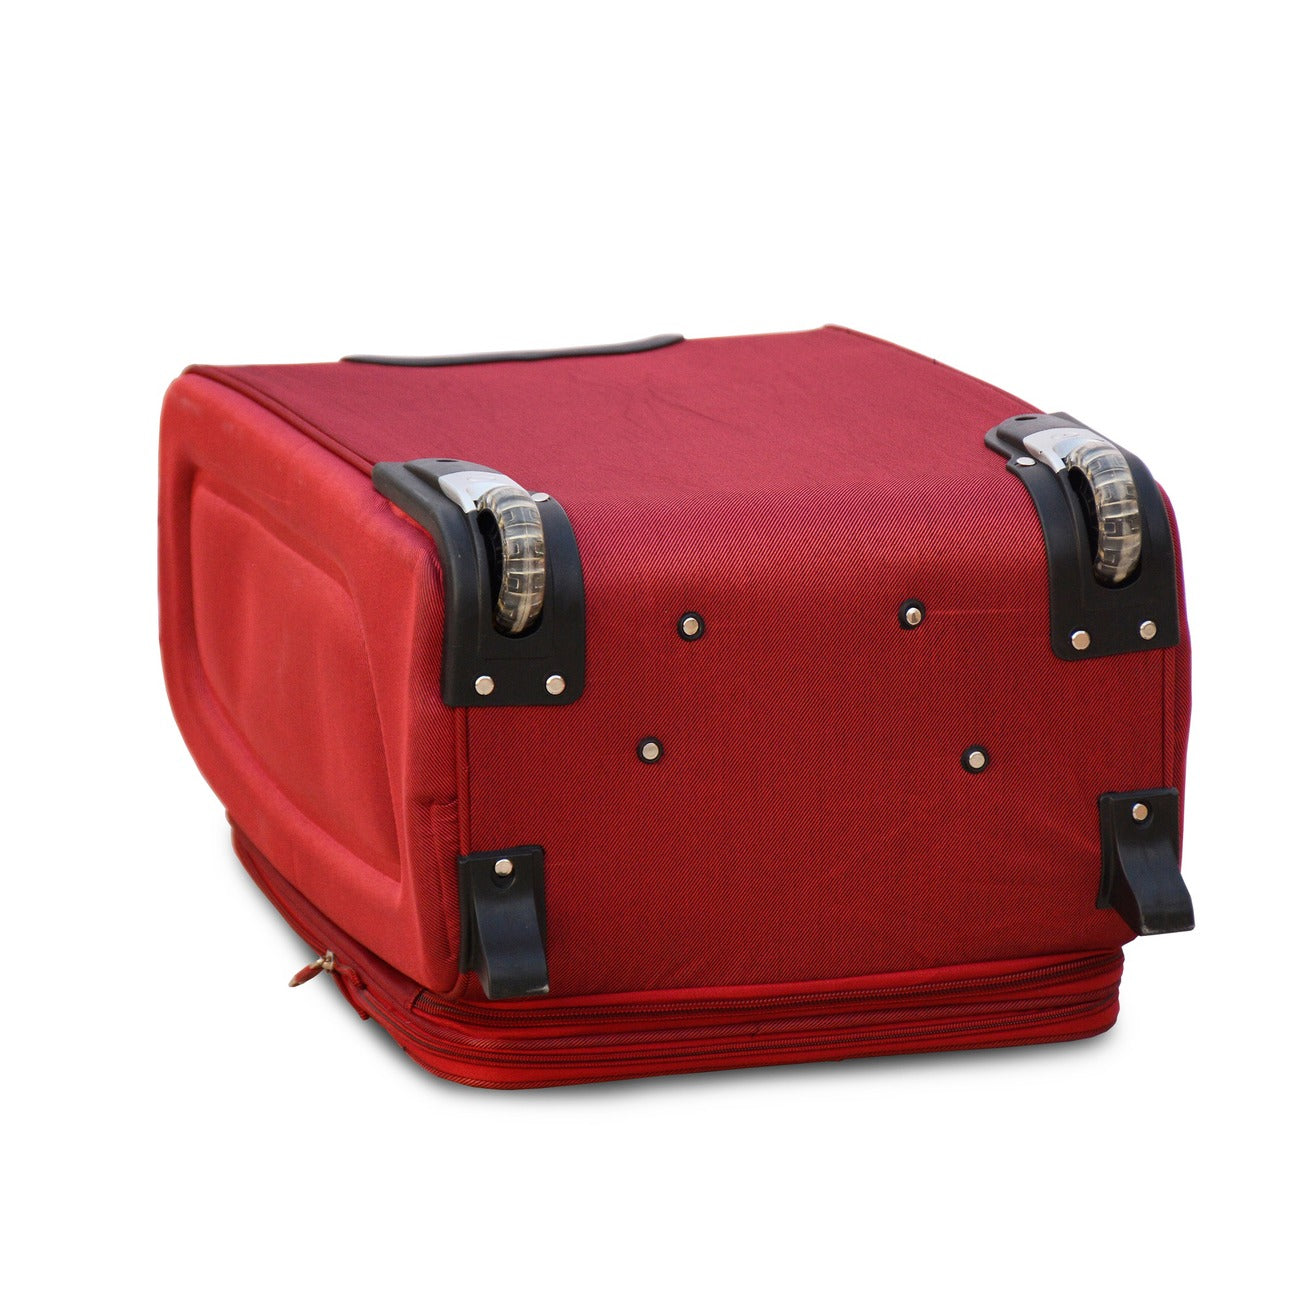 20" RedColour SJ JIAN 2 Wheel Luggage Lightweight Soft Material Carry On Trolley Bag Zaappy.com